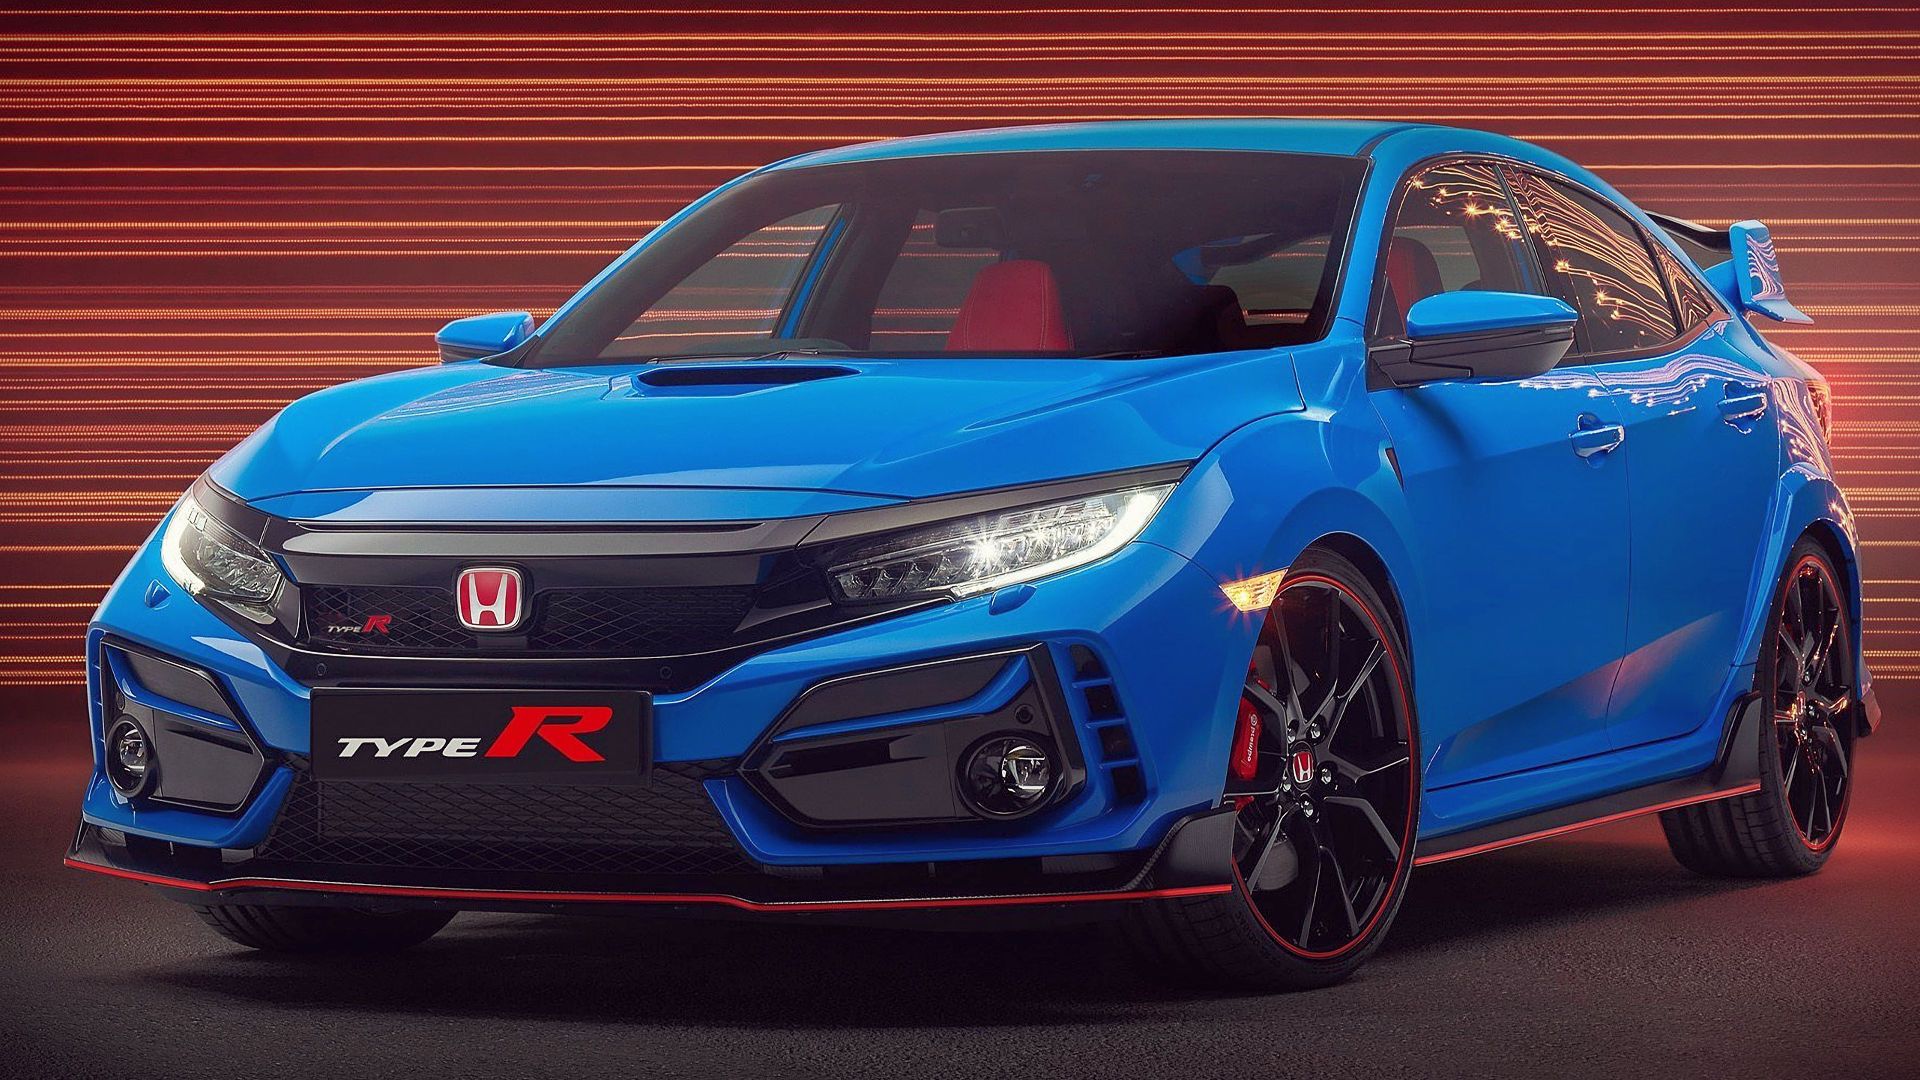 Honda Civic Type R 2020 Image